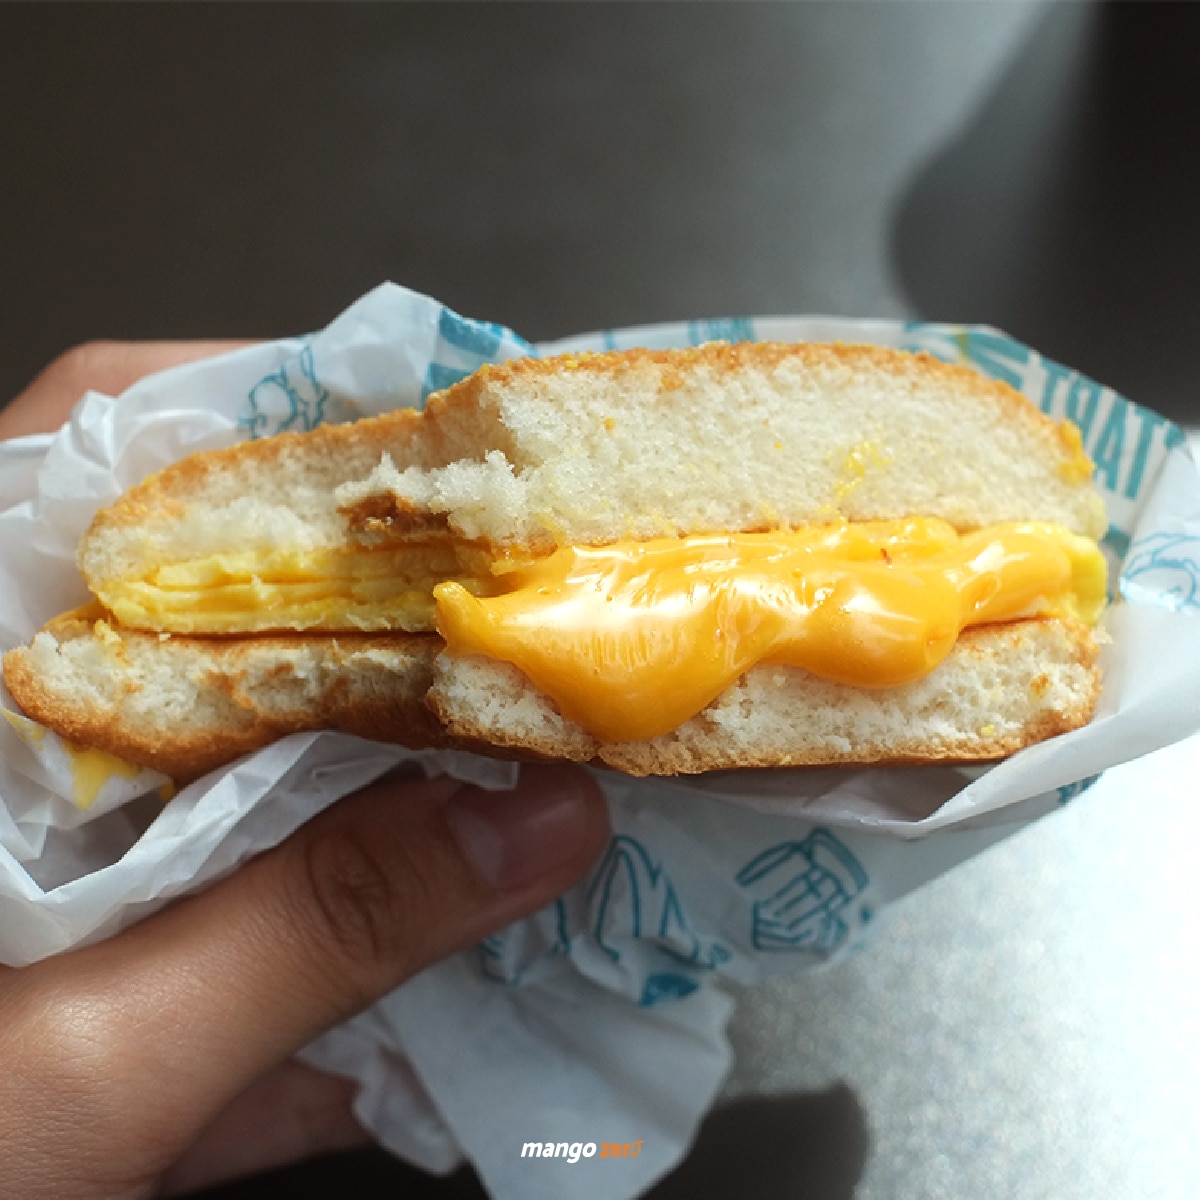 mcdonalds-cheesy-egg-bun-and-sweet-potato-desserts-04